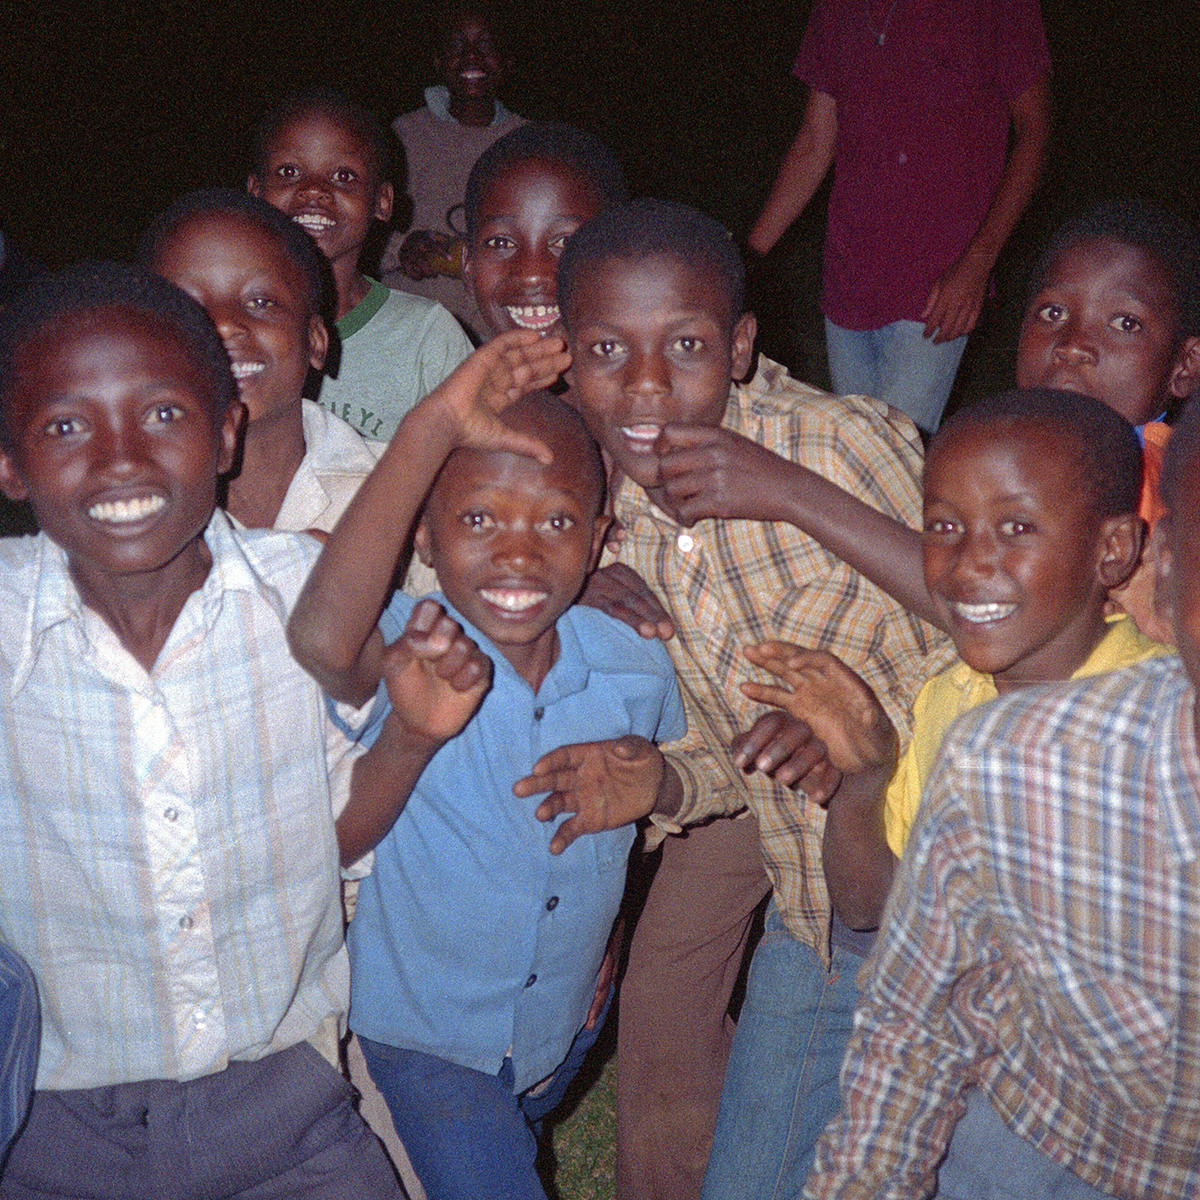 Children we met on the lower slopes of Kilimanjaro